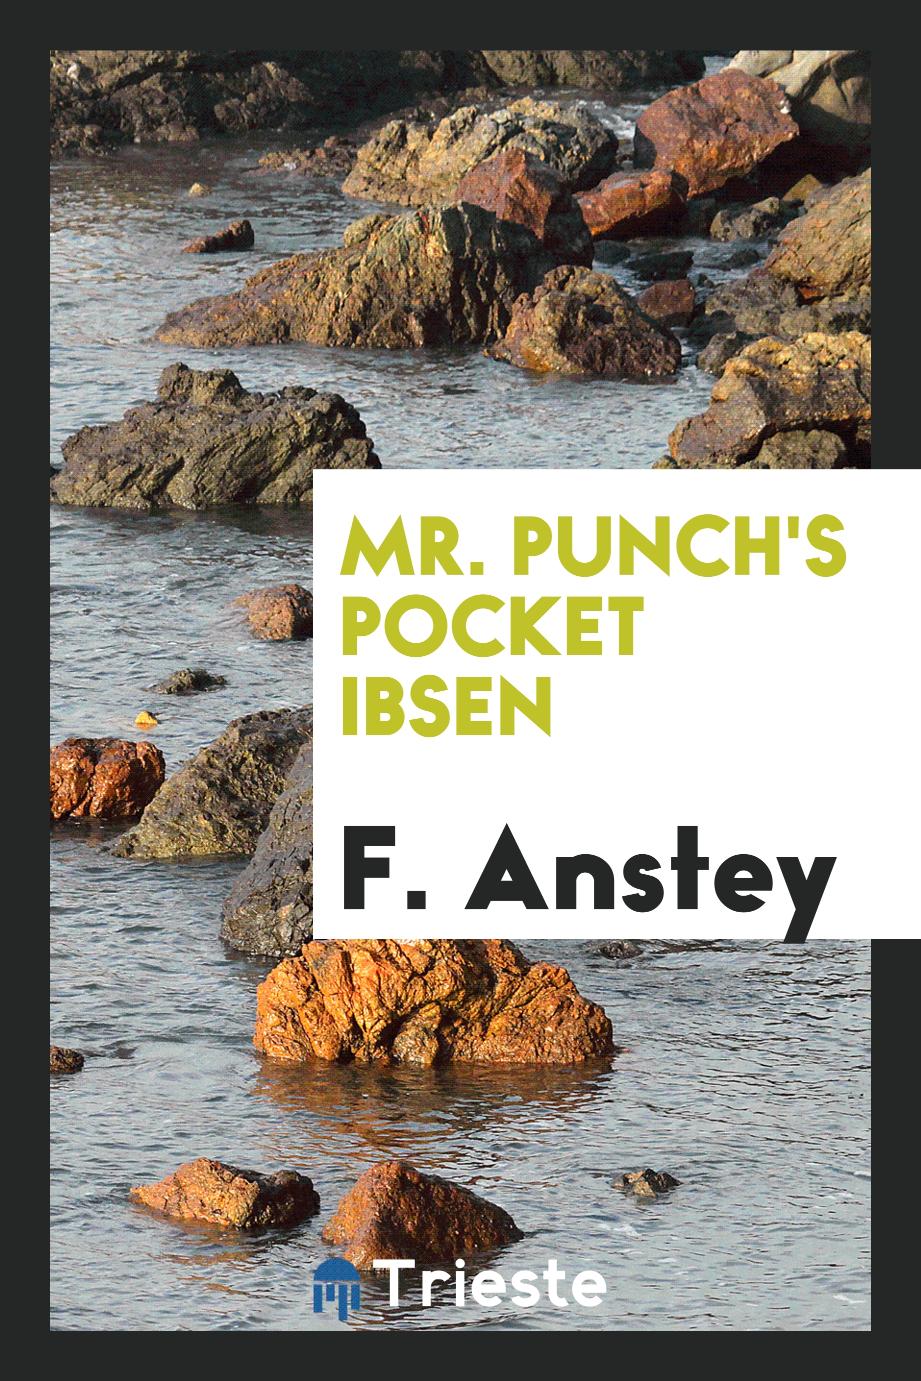 Mr. Punch's pocket Ibsen